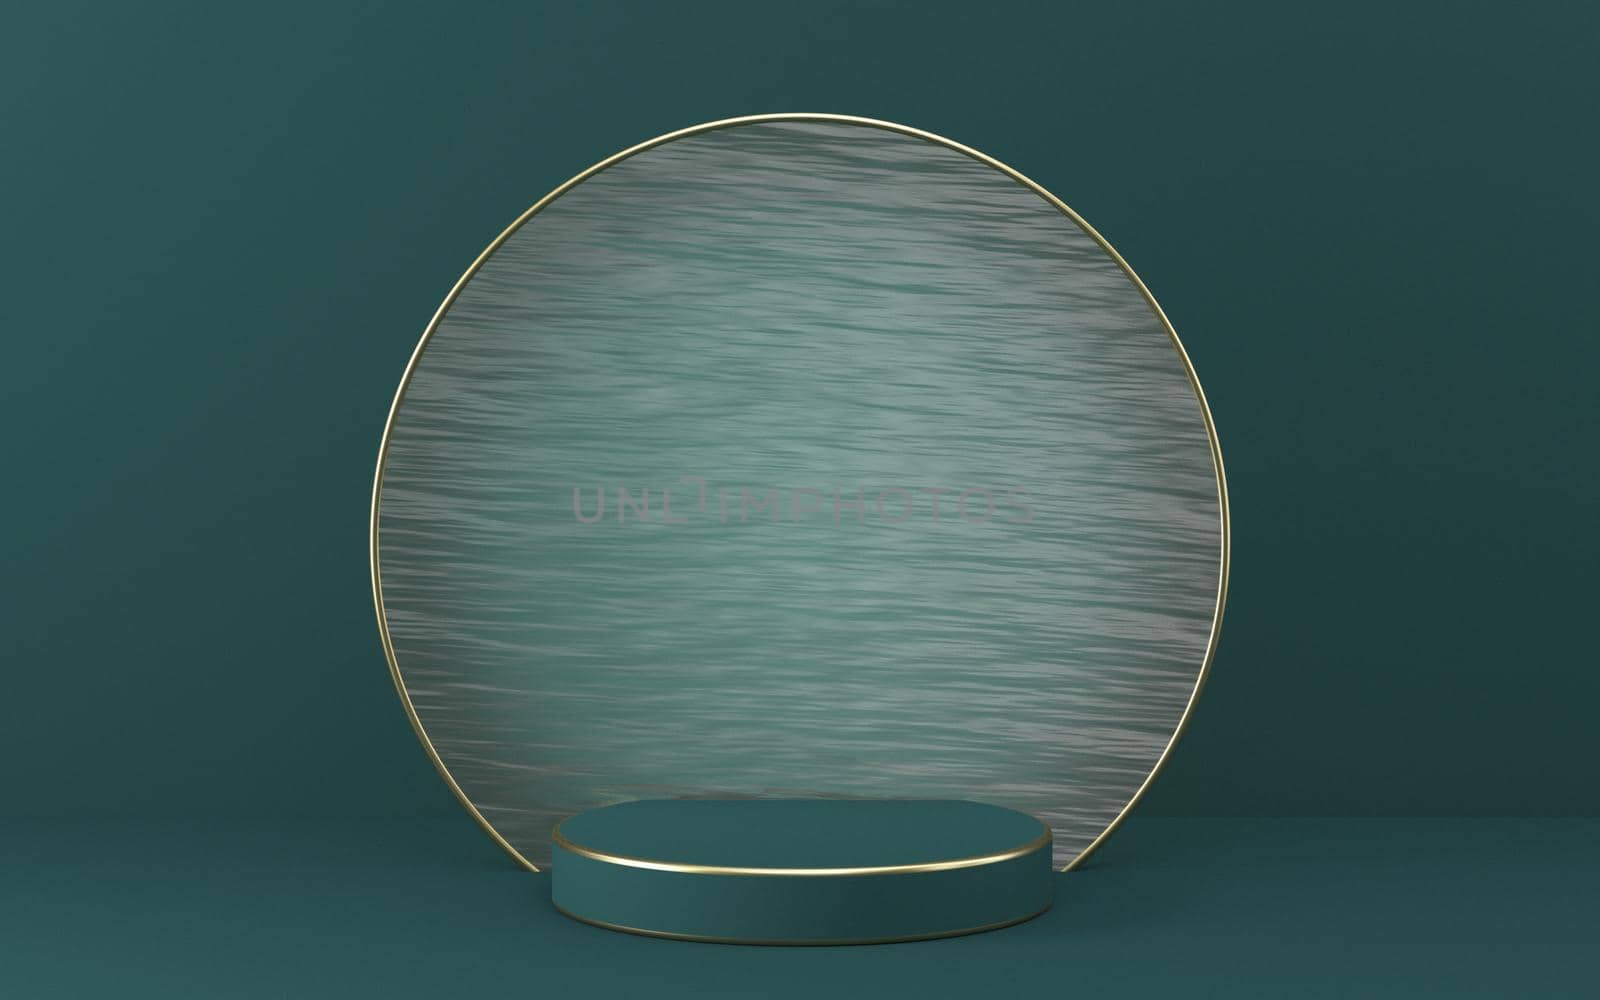 Mock up podium for product presentation textured glass circle 3D render illustration on green background